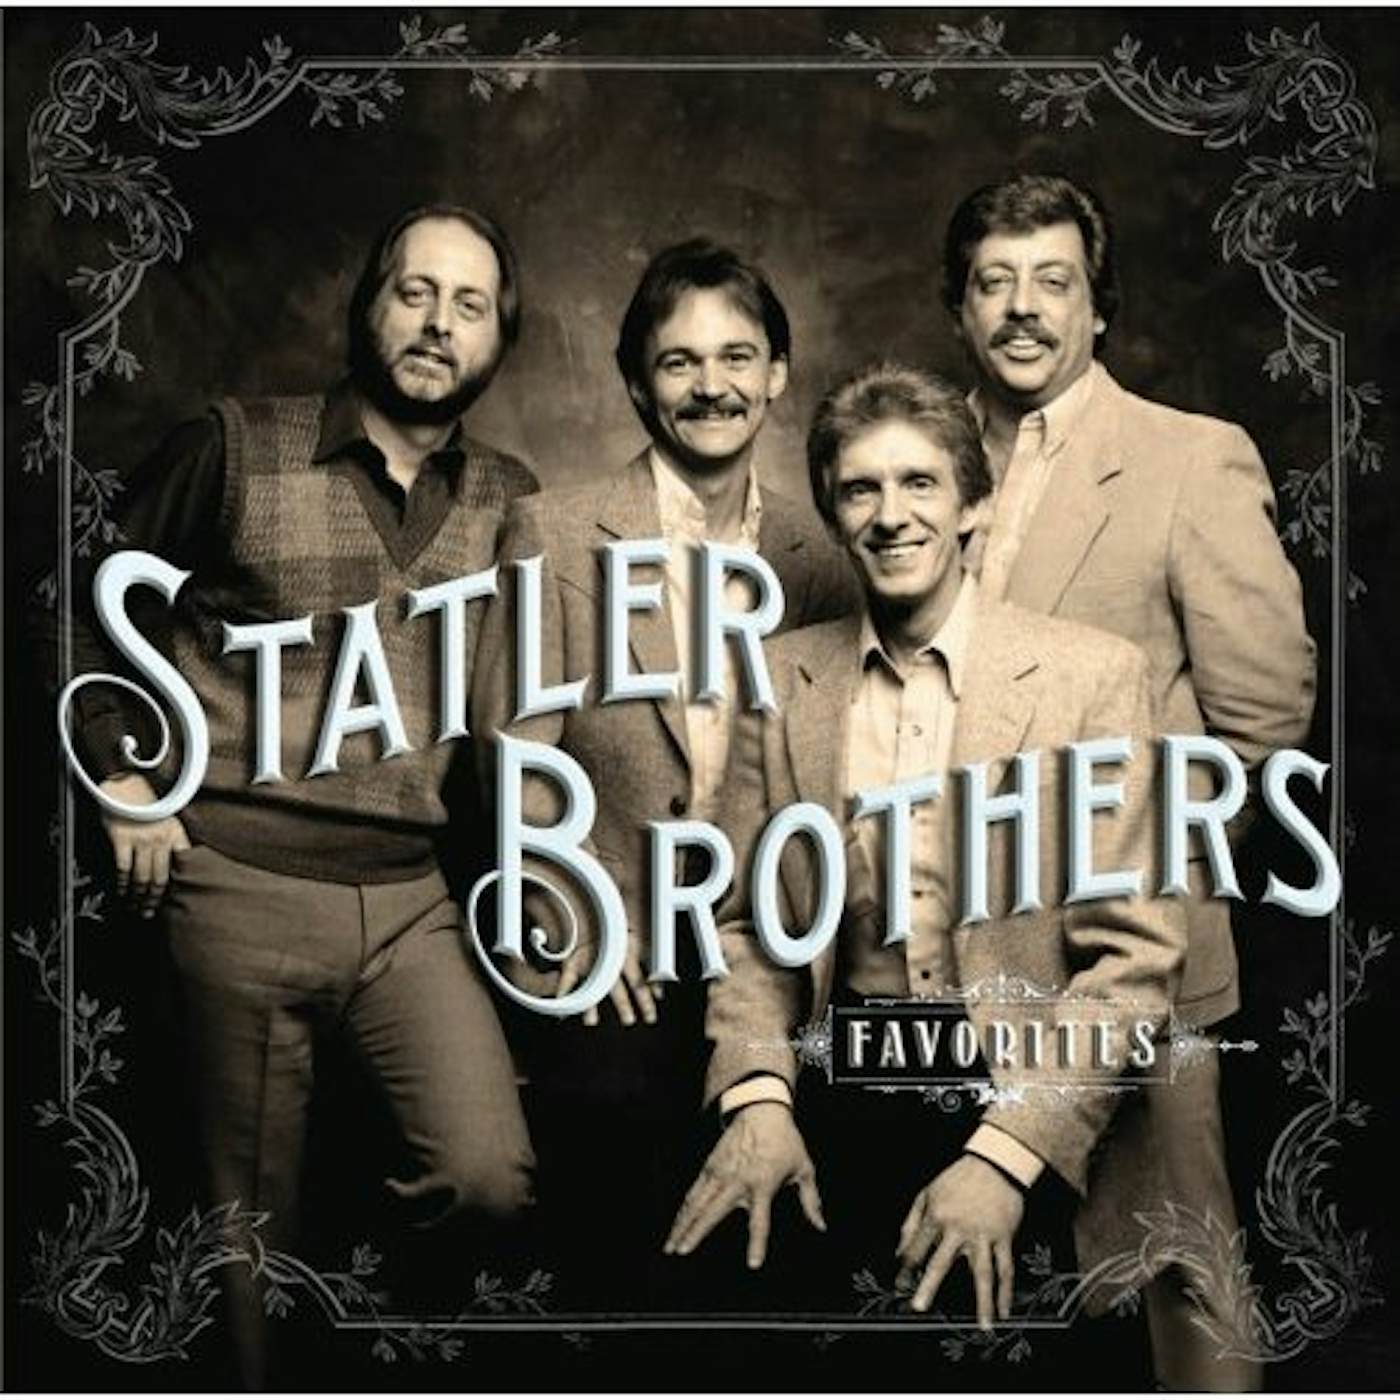 The Statler Brothers FAVORITES CD